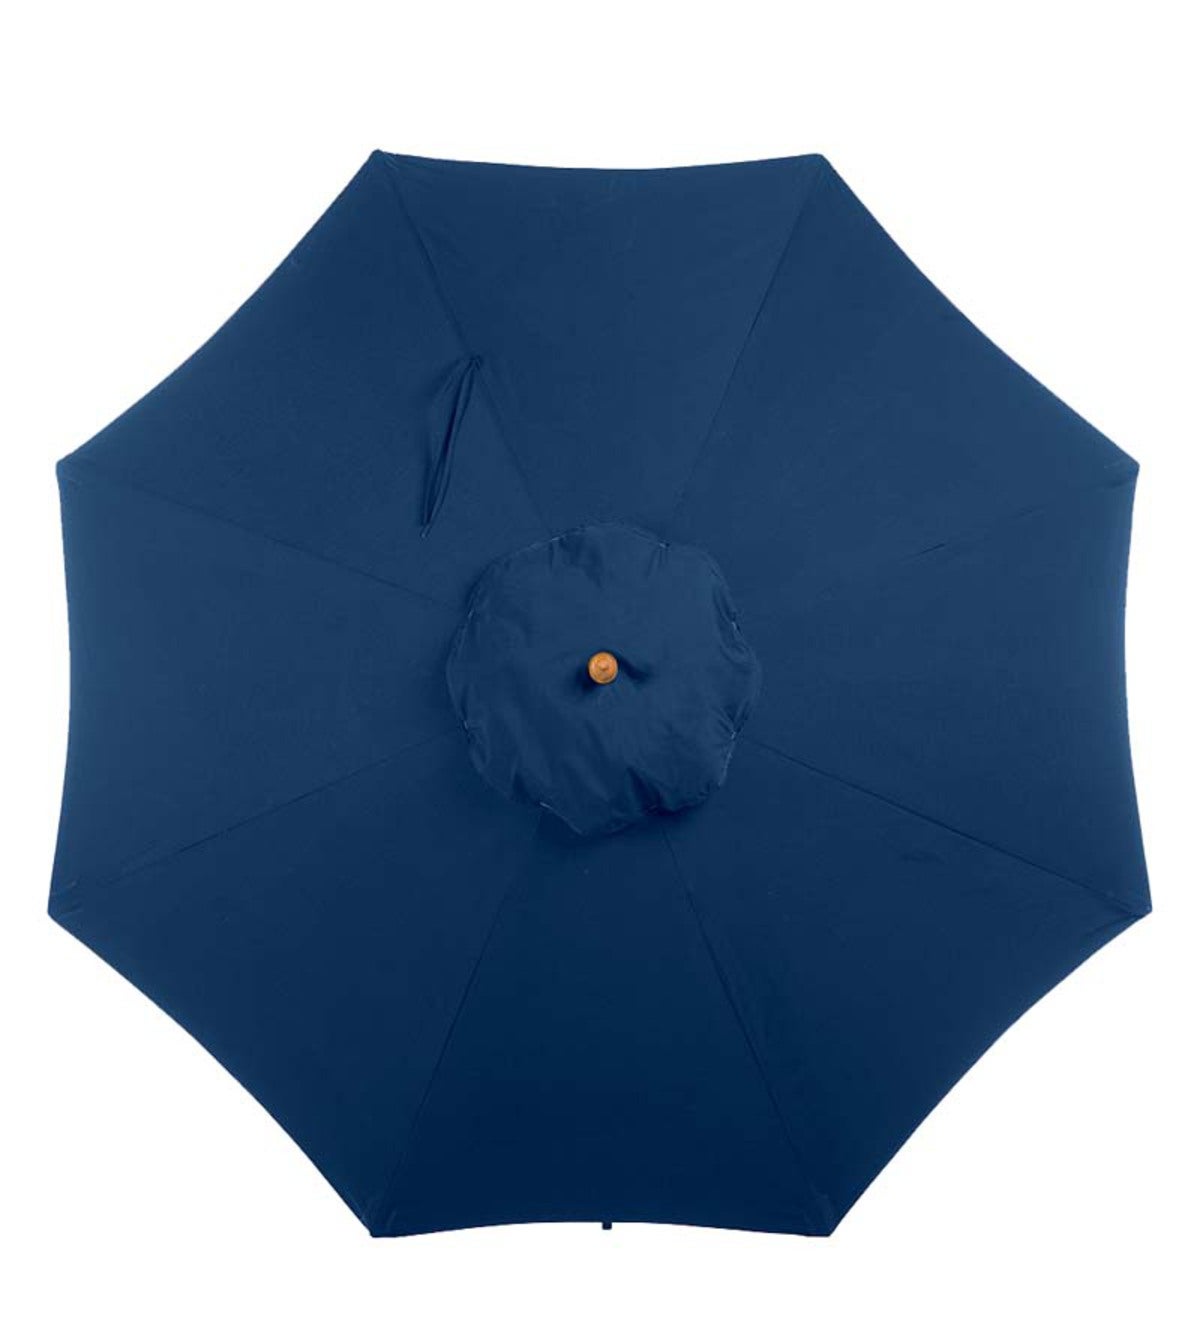 Navy 9' Deluxe Sunbrella™ Market Umbrella